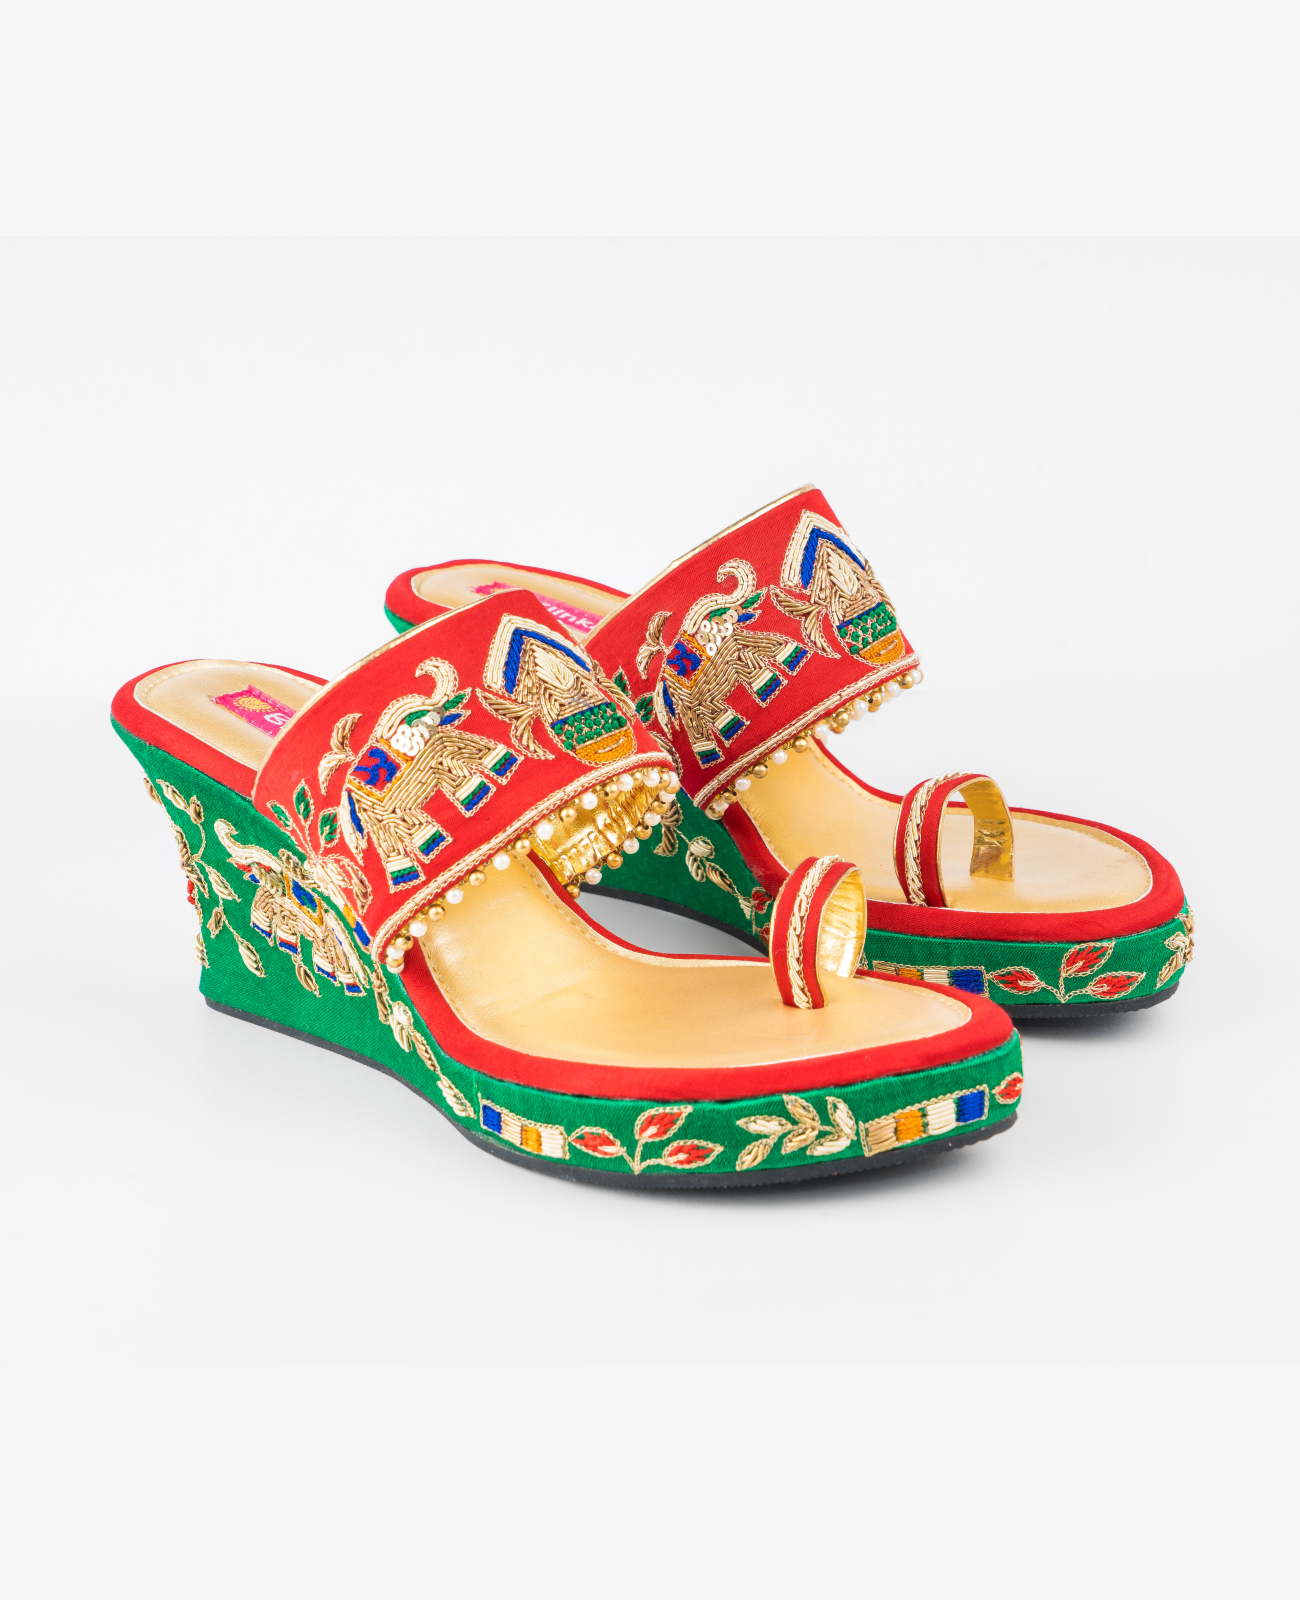 Dolce & Gabbana Cinderella Crystal Pumps Sandals KEIRA Green 40 10 |  FASHION ROOMS